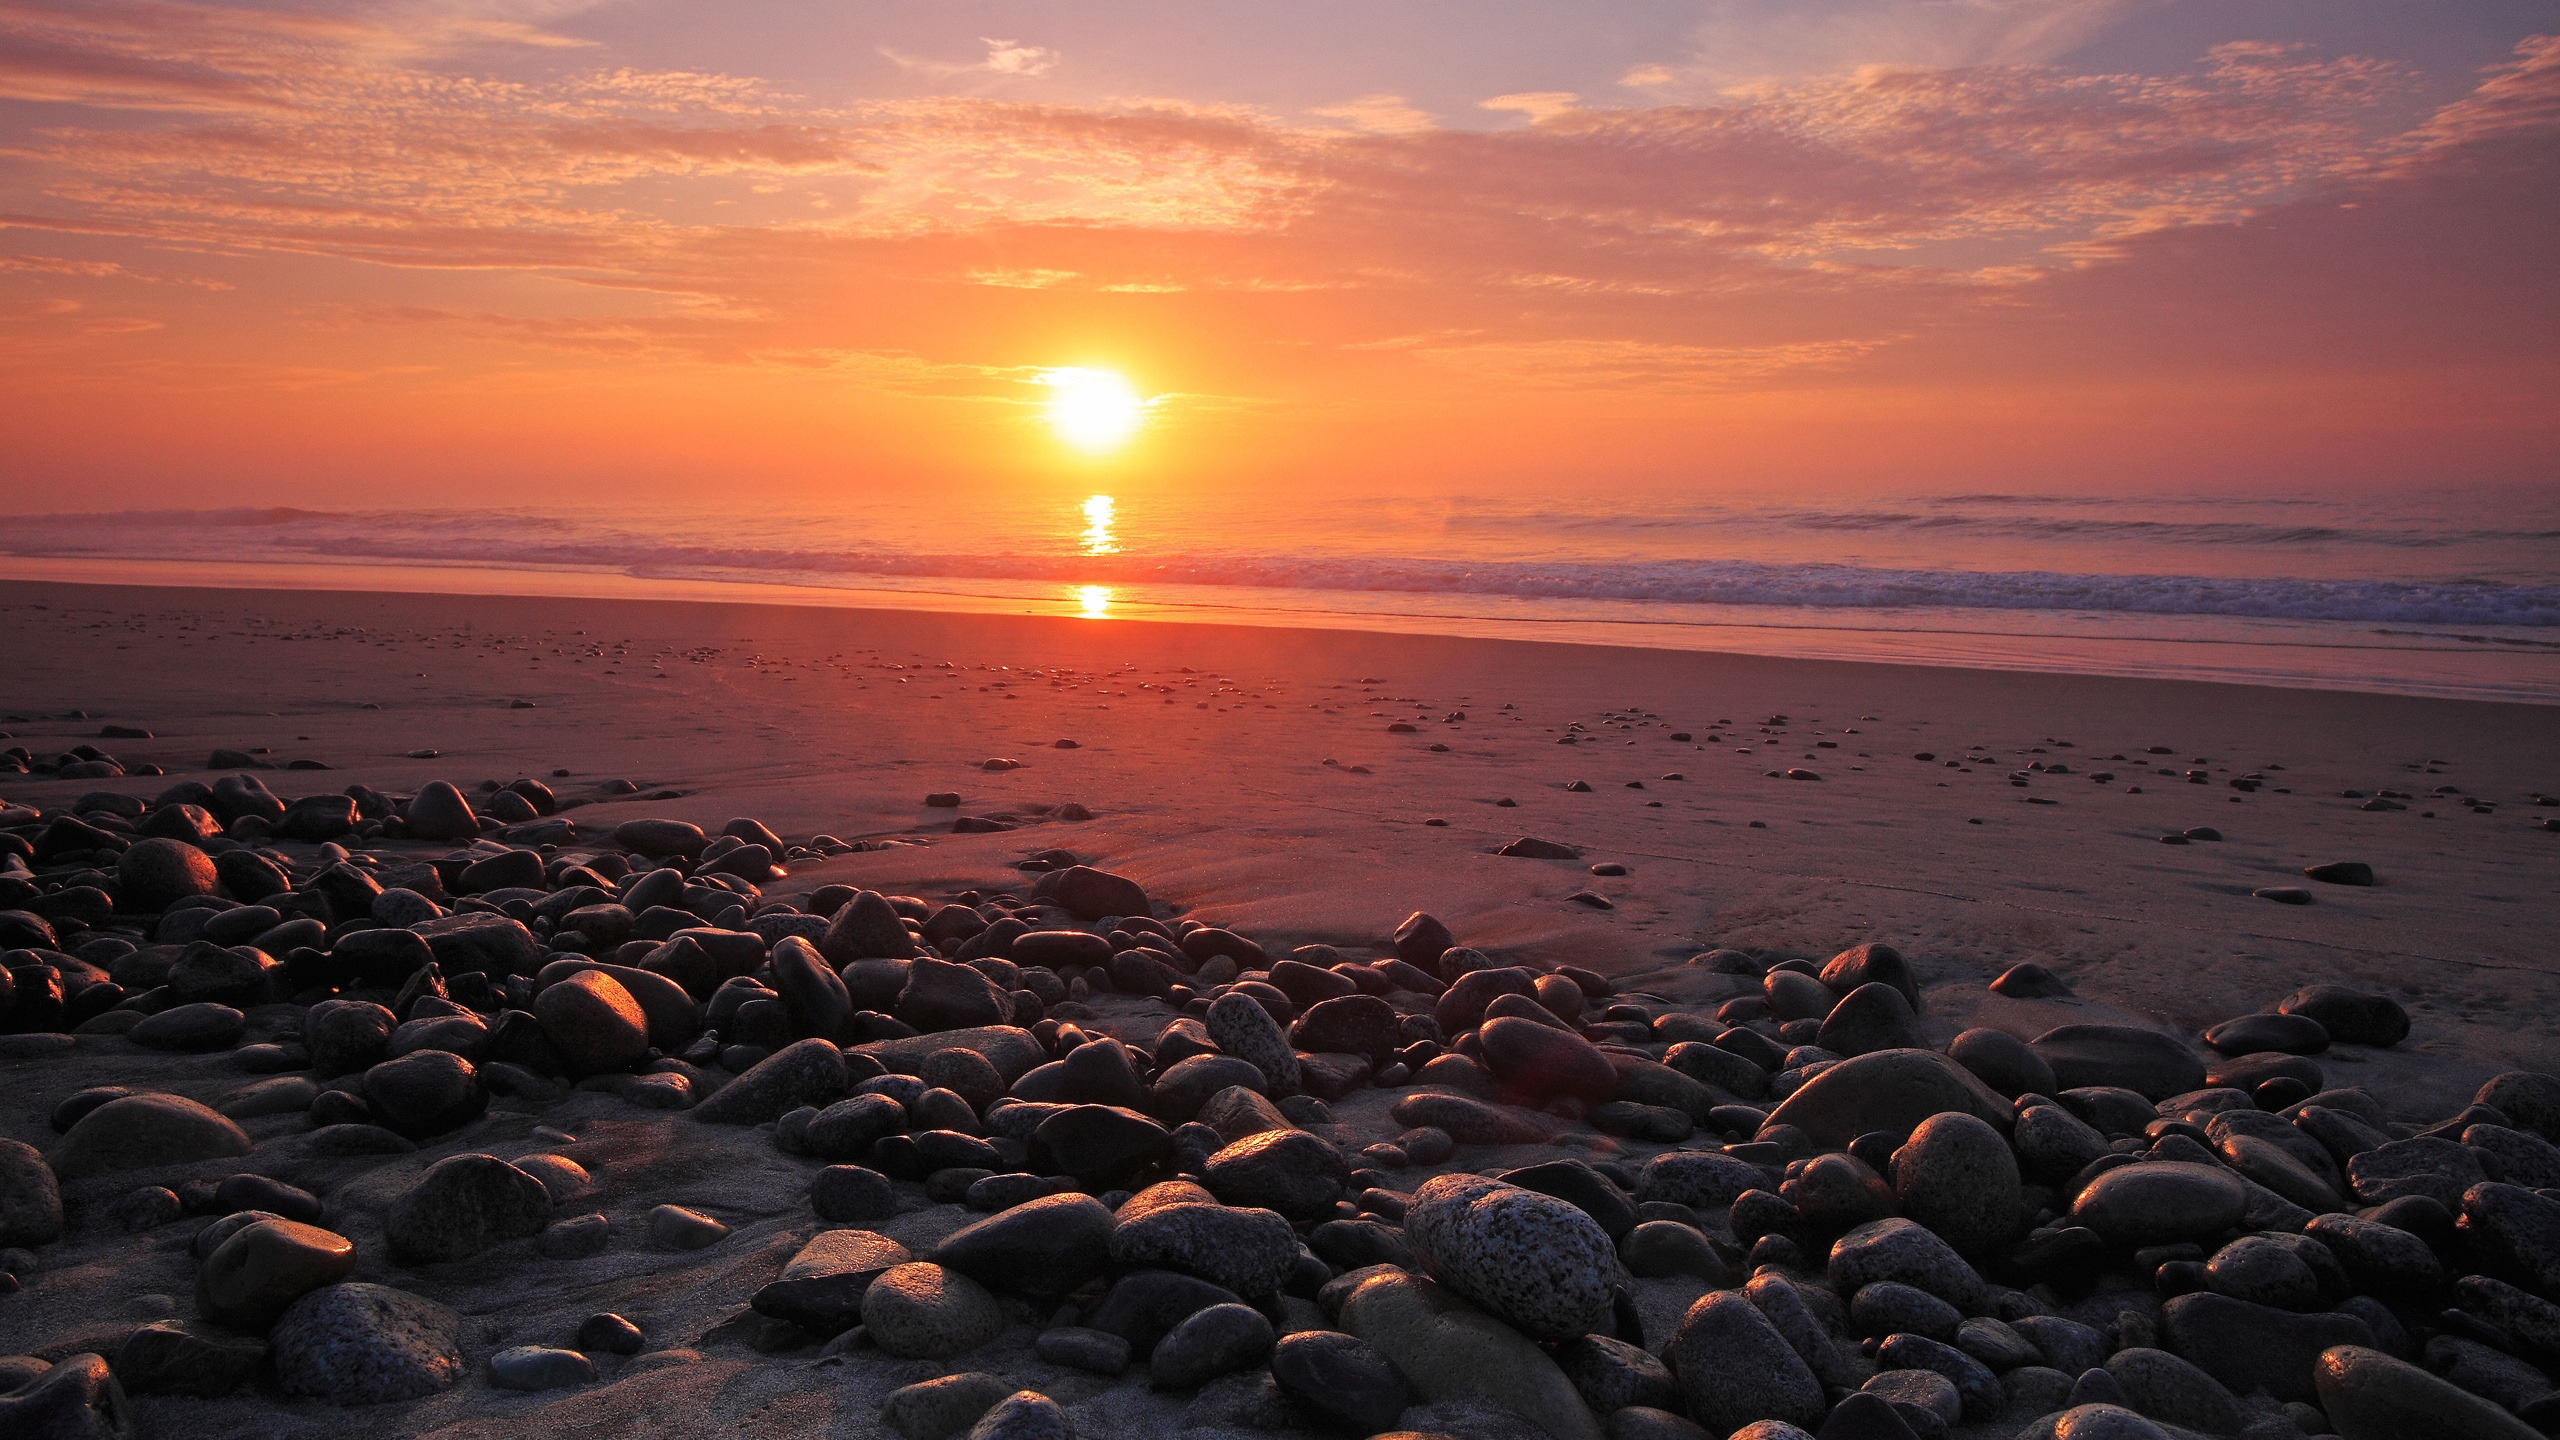 Sunset Beach for 2560x1440 HDTV resolution